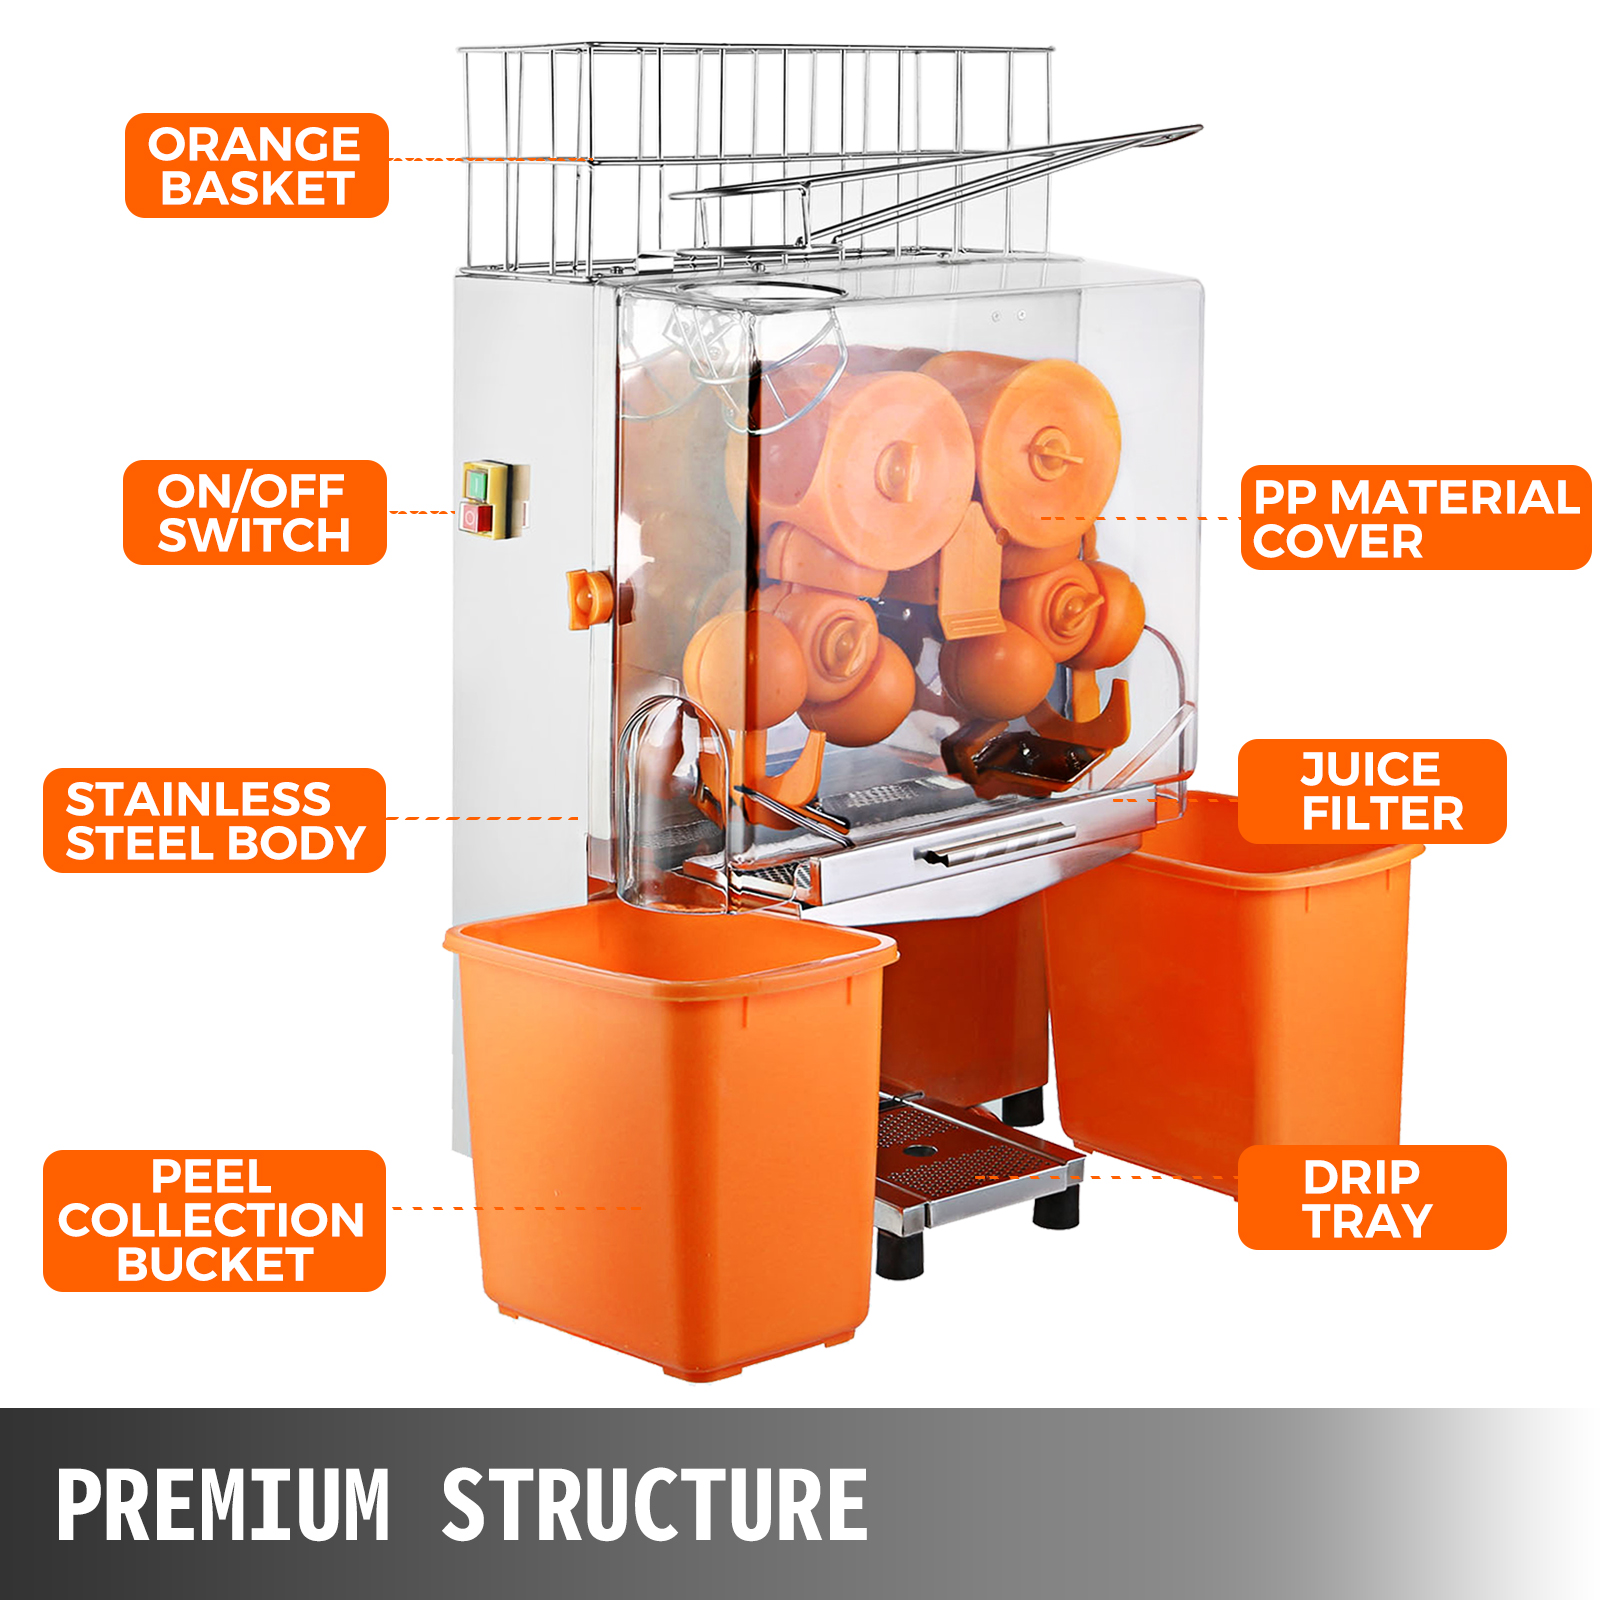 Exprimidor de naranjas eléctrico - naranja - alimentación manual - incl.  grifo de drenaje ajustable